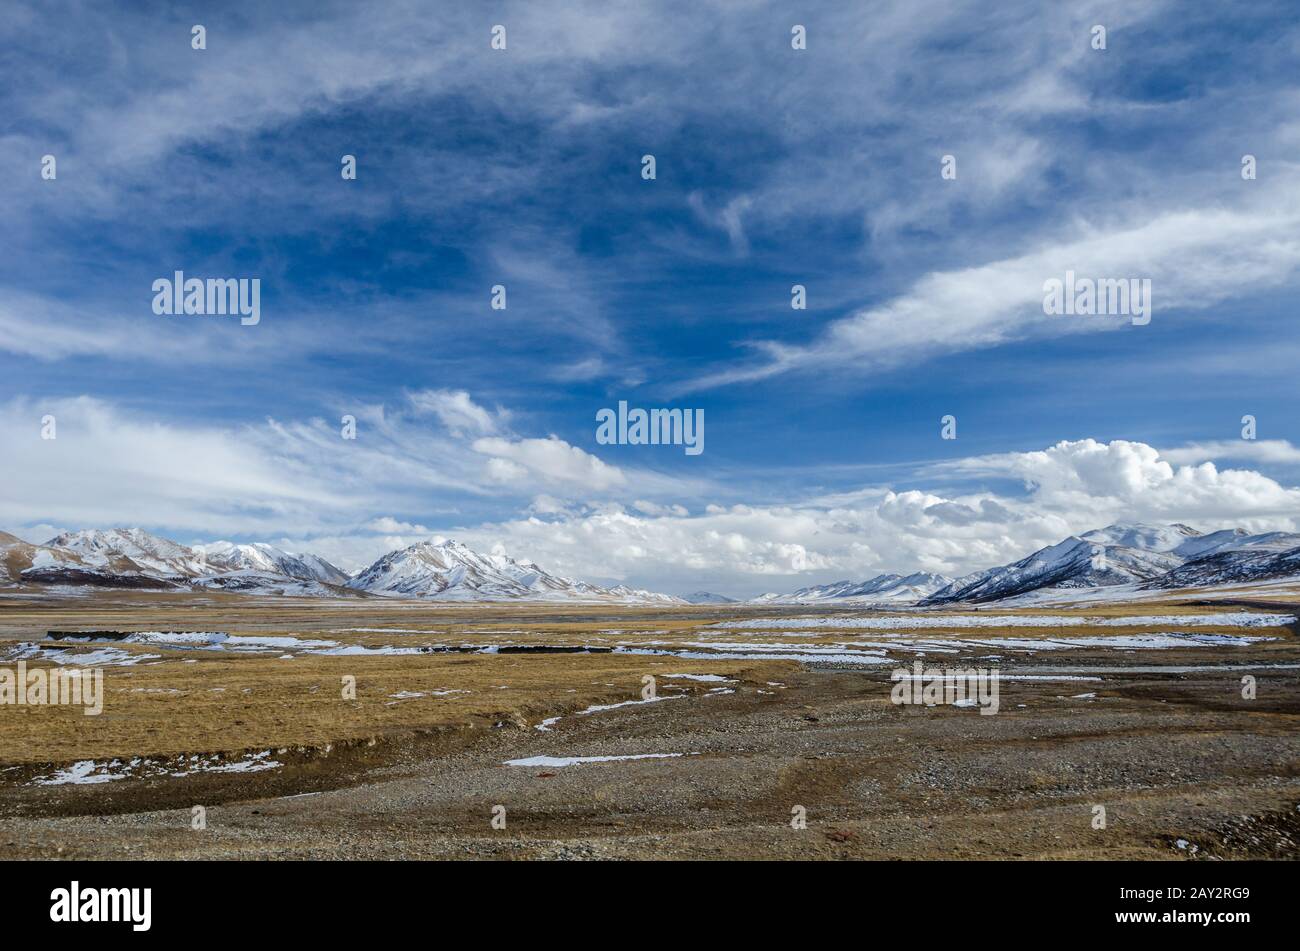 Amazing view of high altitude Tibetan plateau Stock Photo